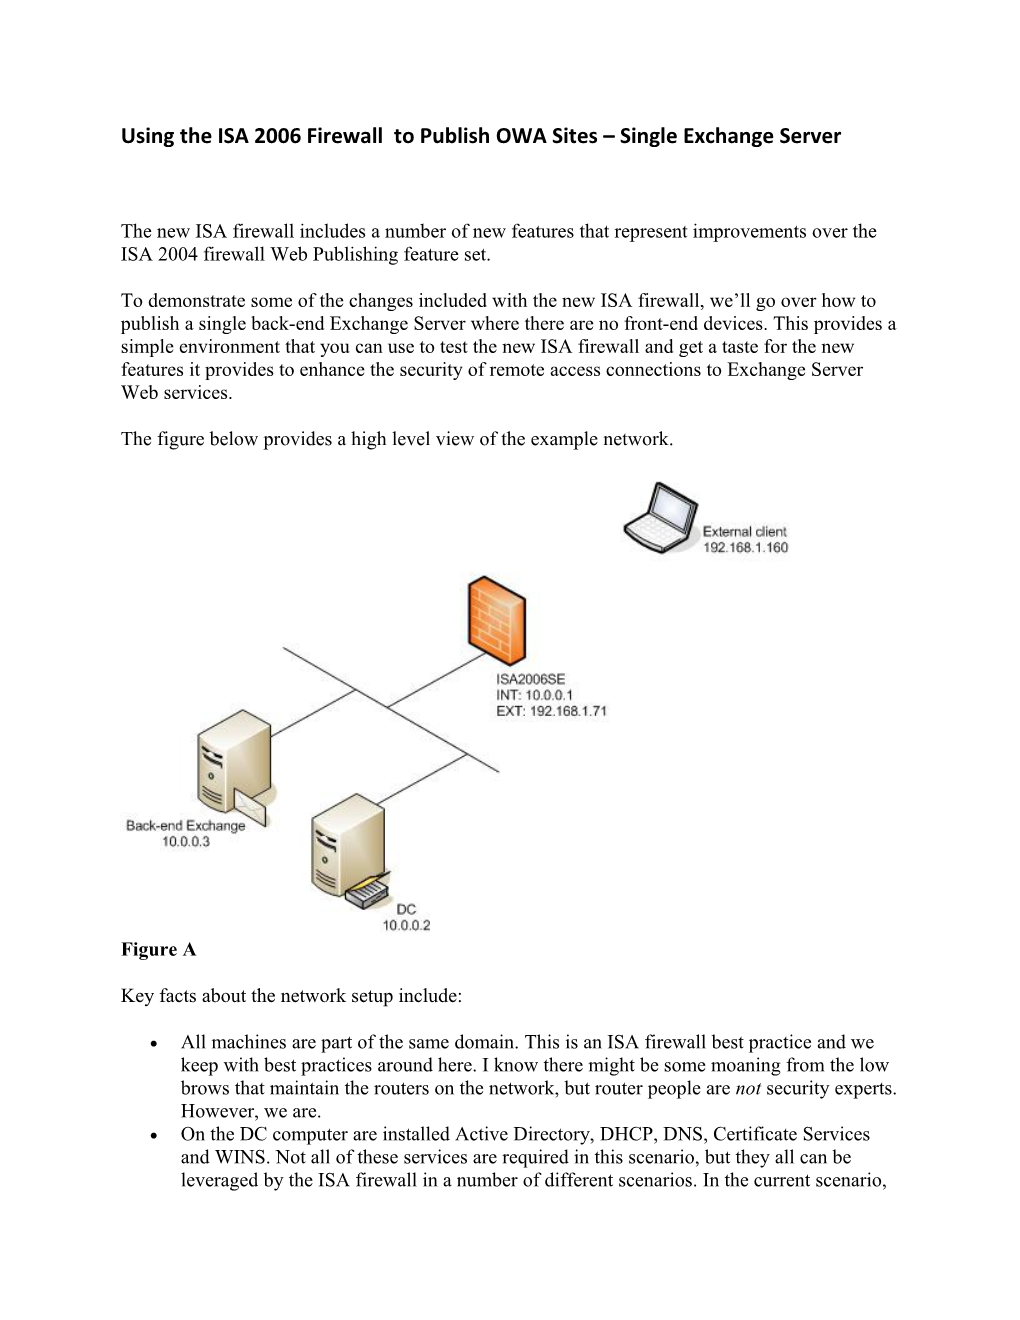 Using the ISA 2006 Firewall to Publish OWA Sites Single Exchange Server